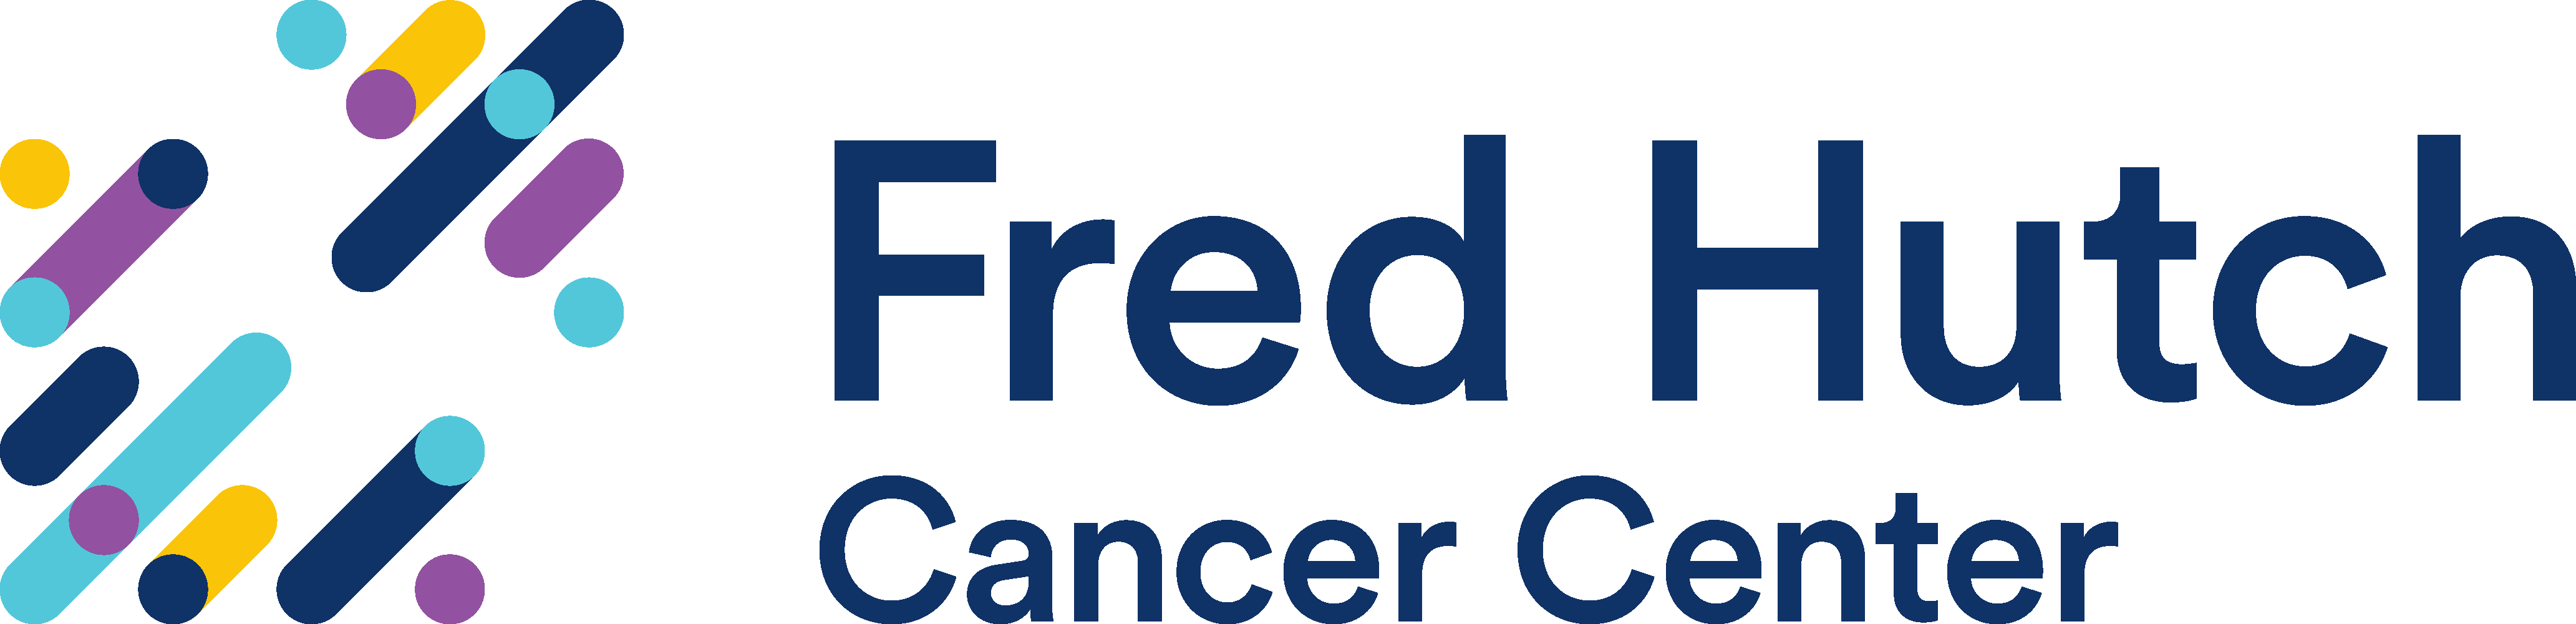 Fred Hutch Cancer Center